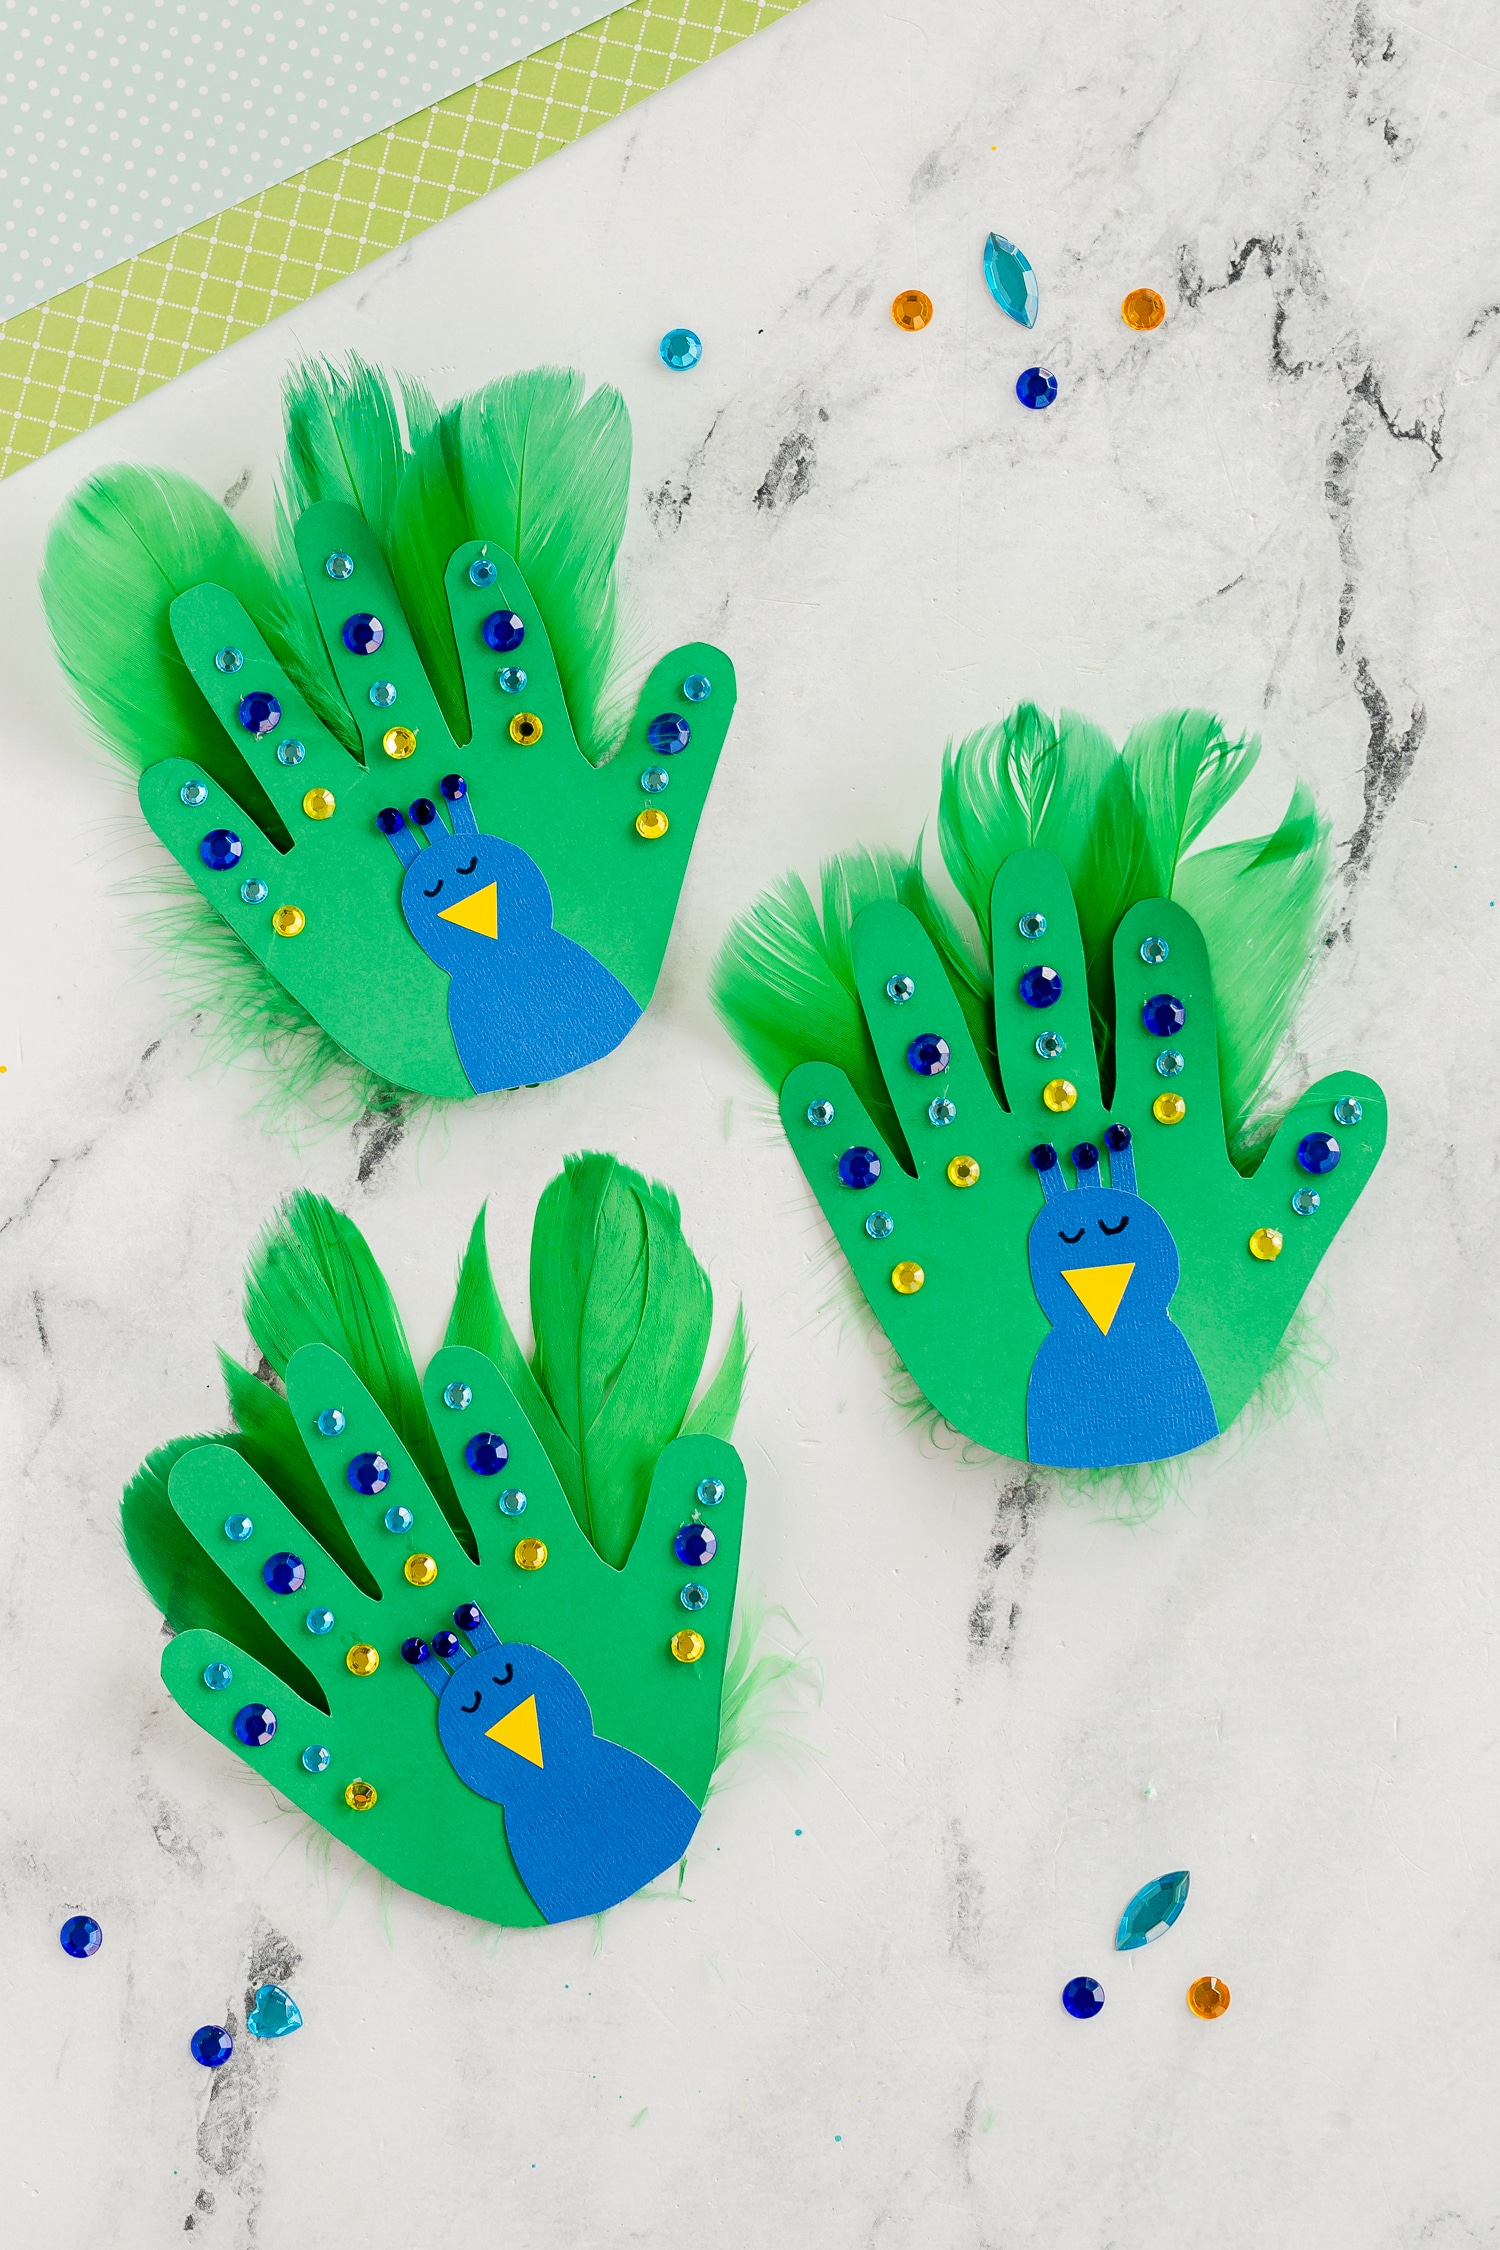 Handprint Peacock